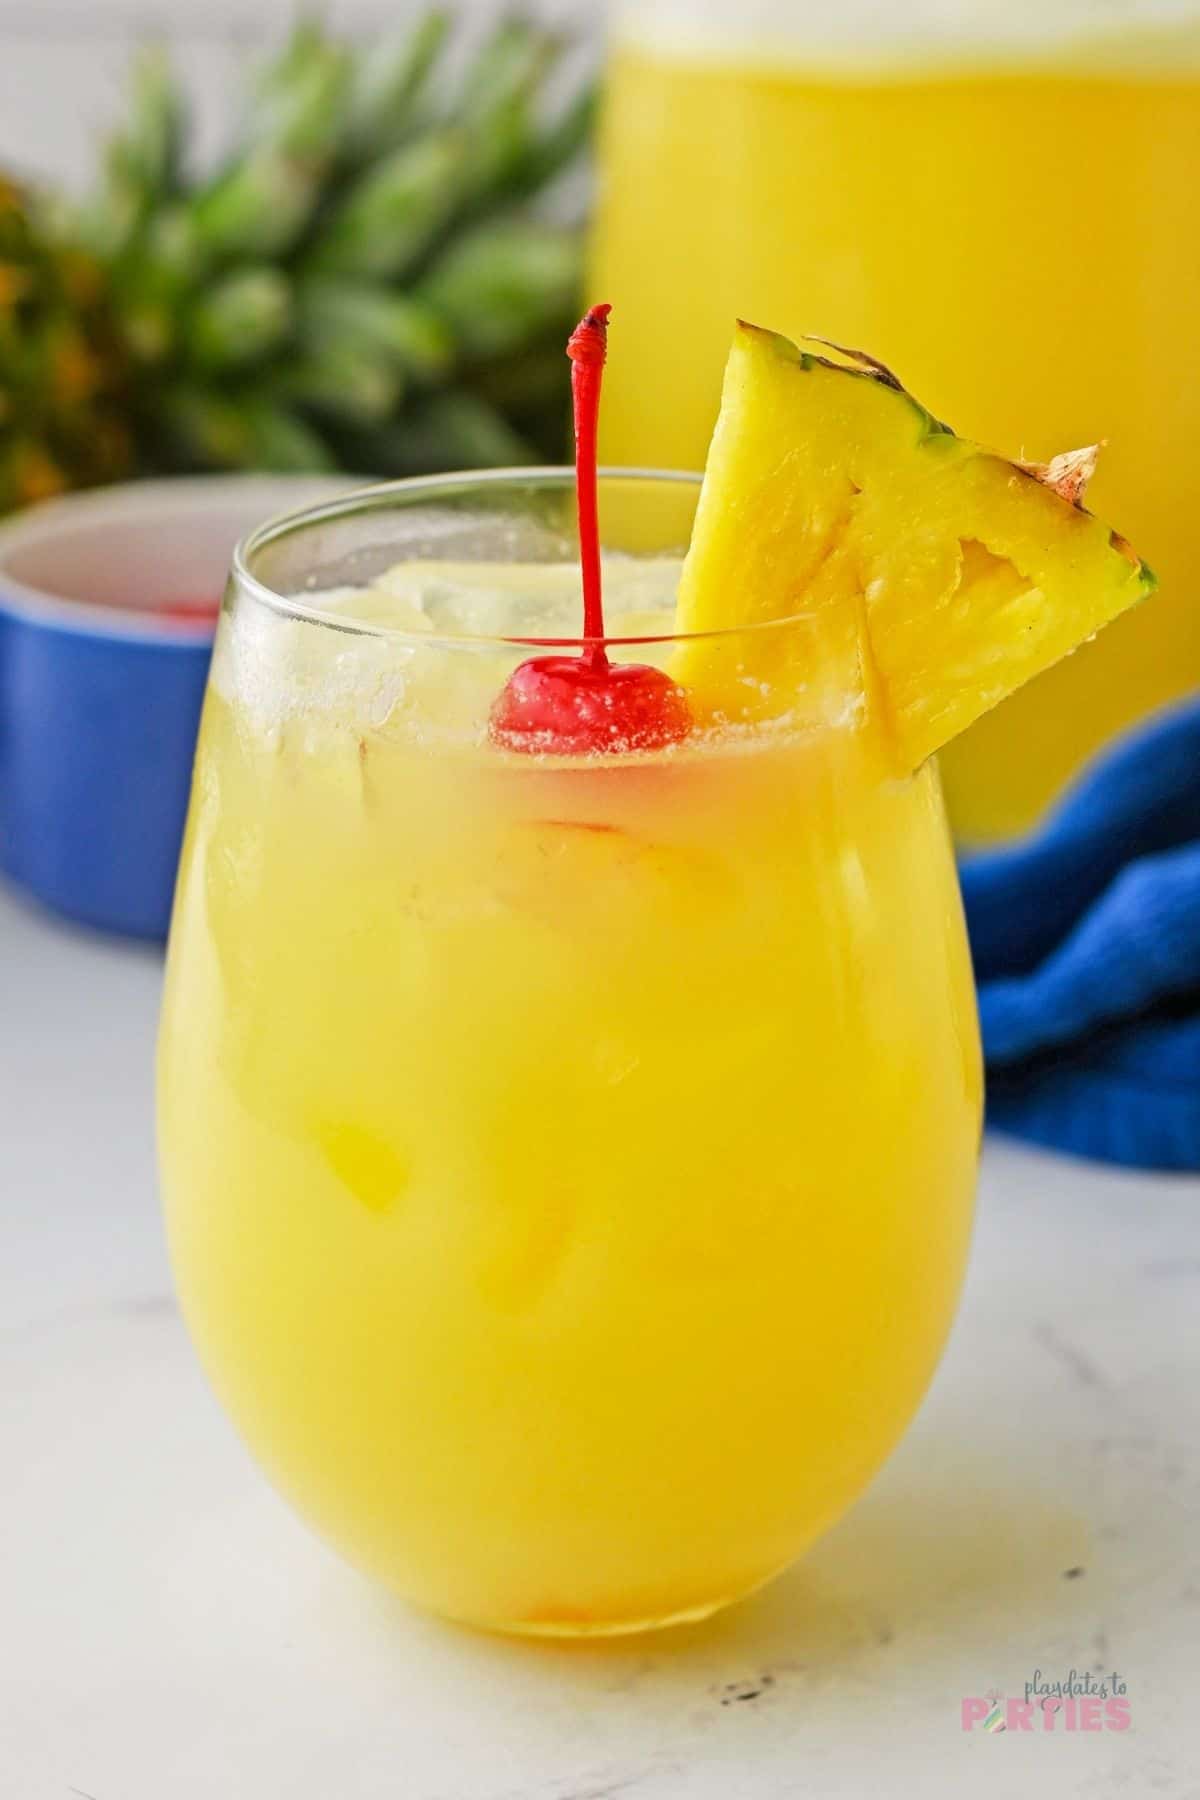 Pineapple coconut juice garnished with maraschino cherries and fresh pineapple.